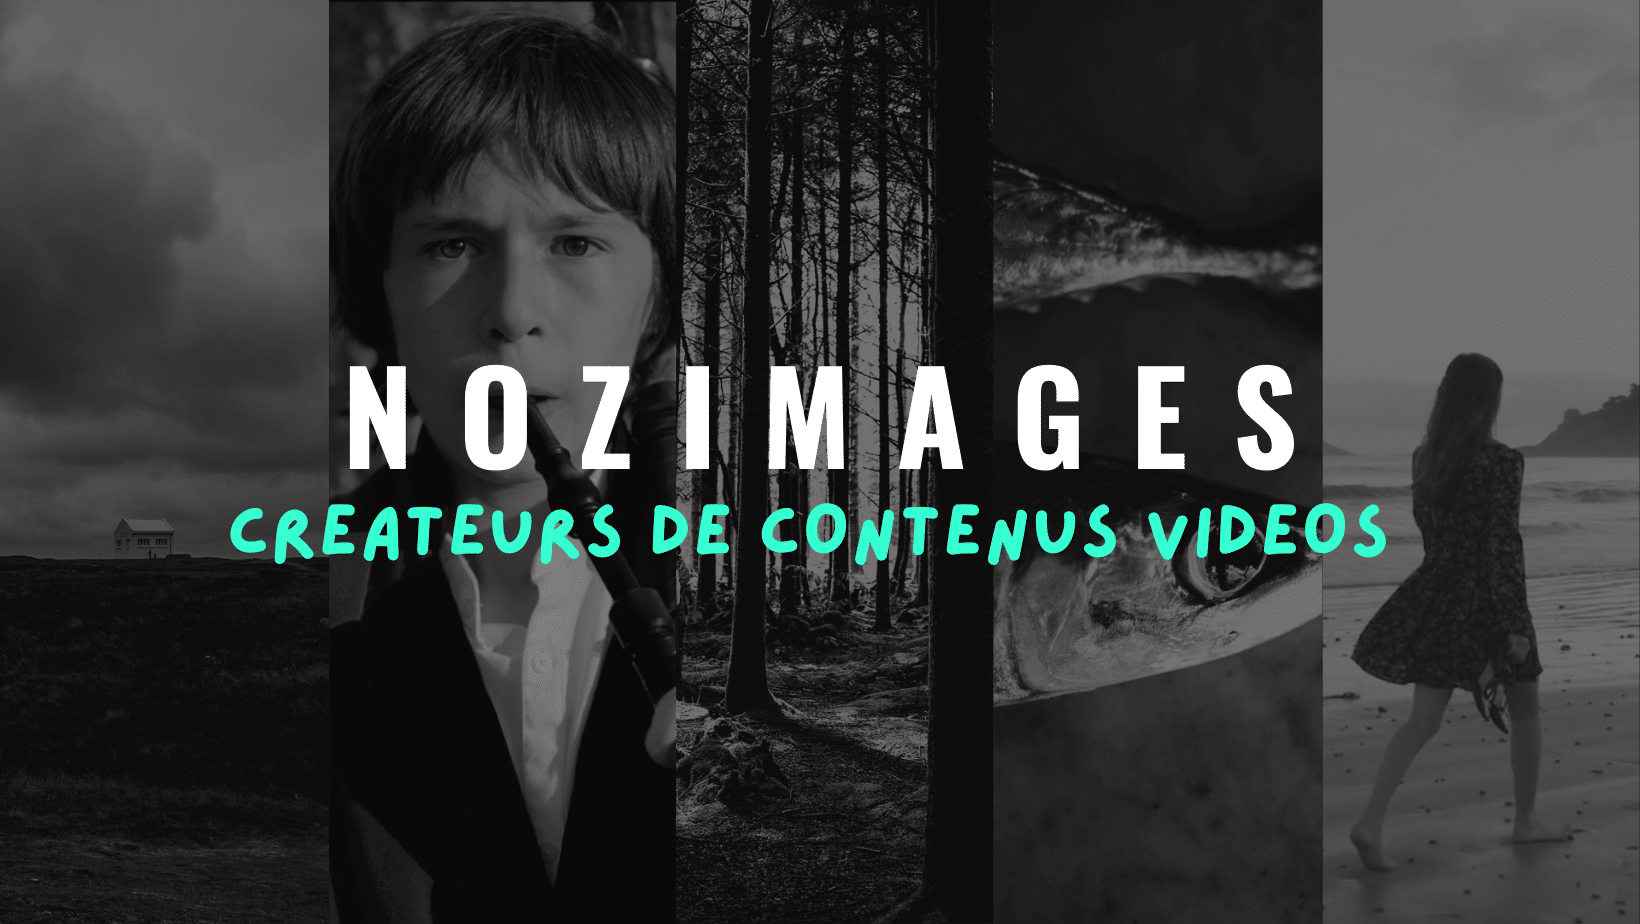 (c) Nozimages.fr